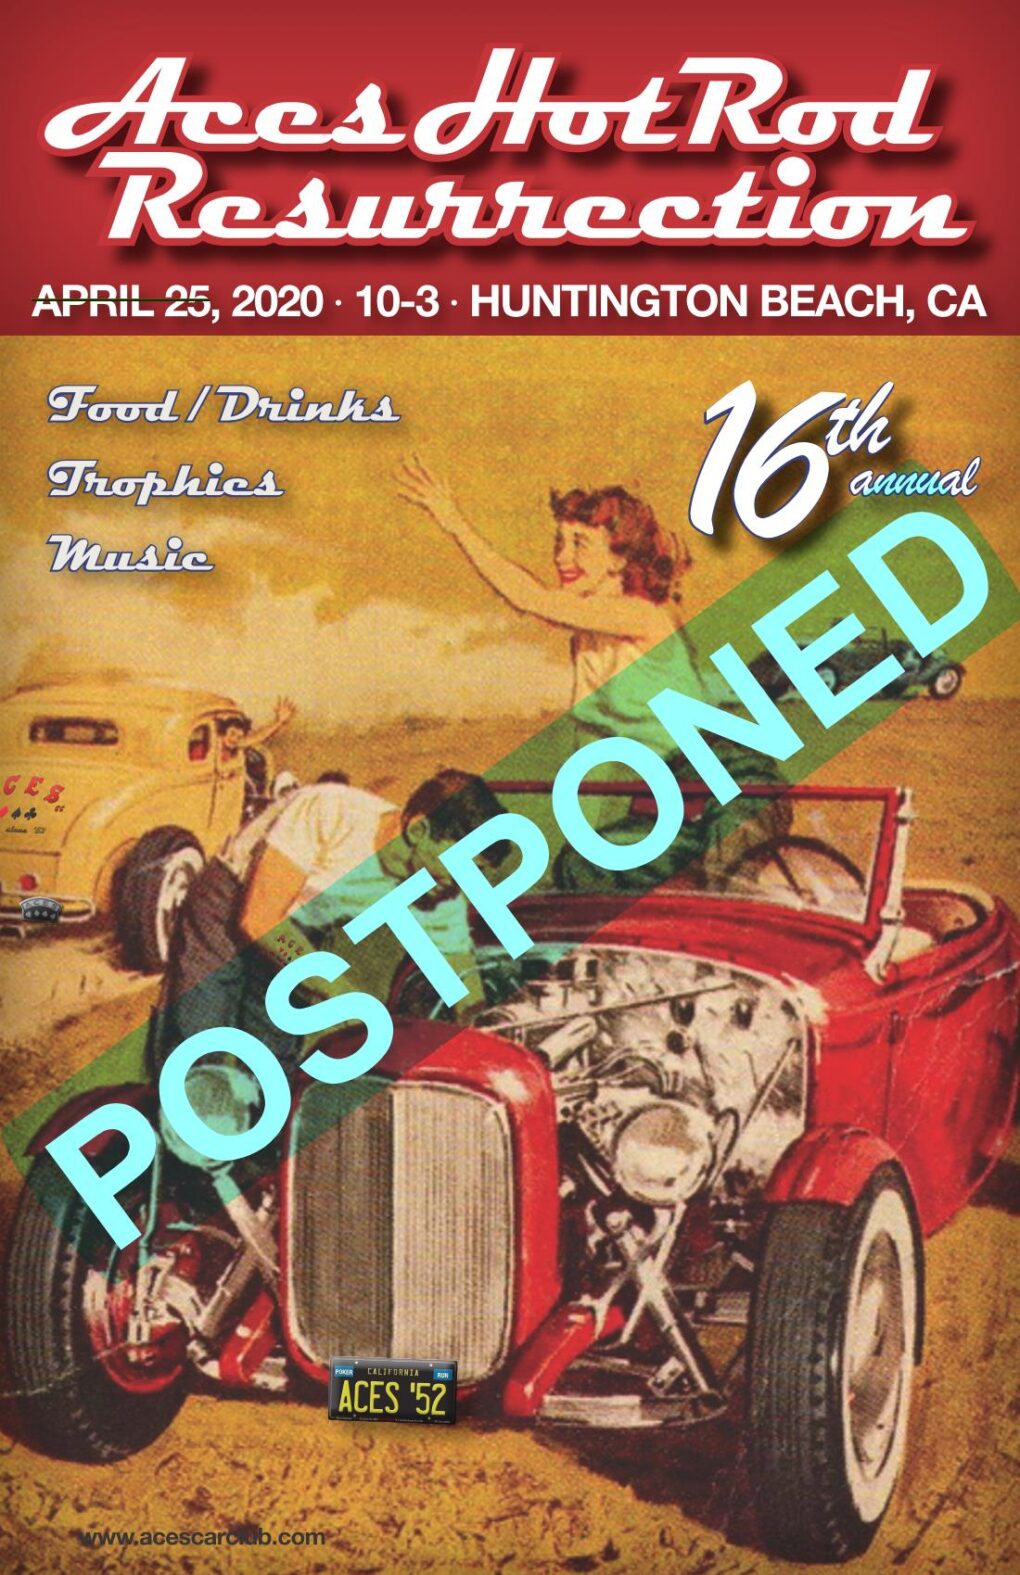 Postponed ACES Car Show